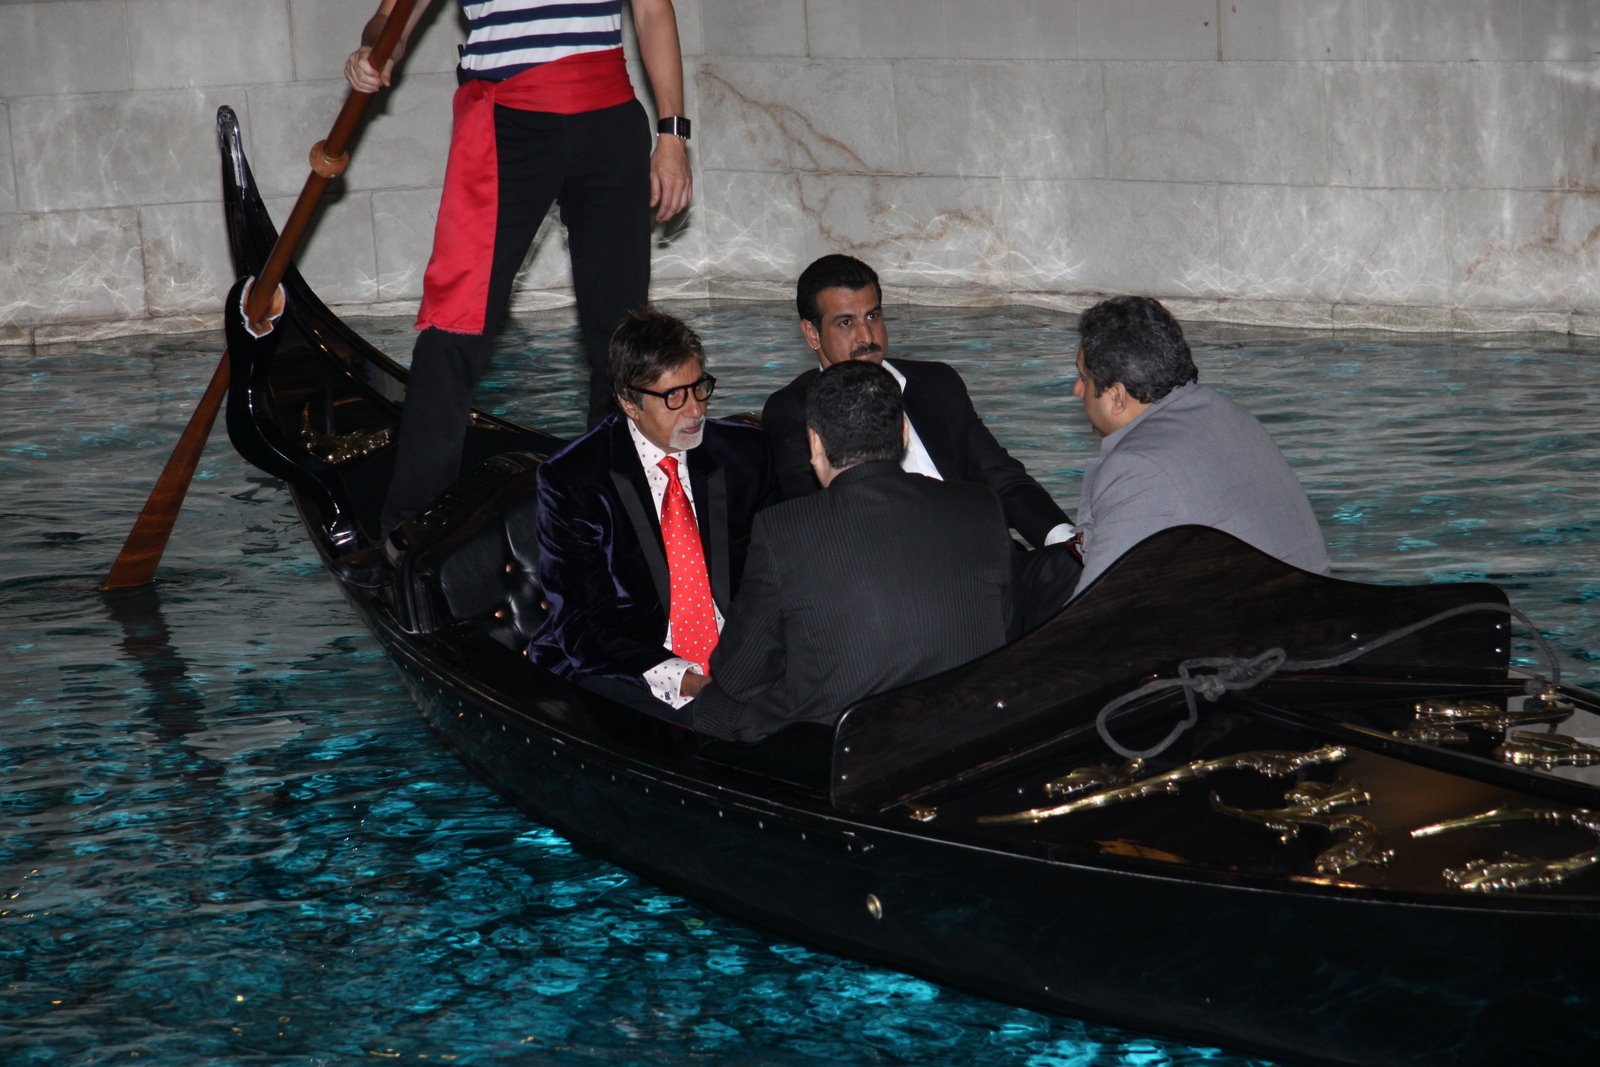 [Bachchan,+IIFA+Brand+Ambassador+rides+a+gandola+after+30+years+since+shooting+for+]